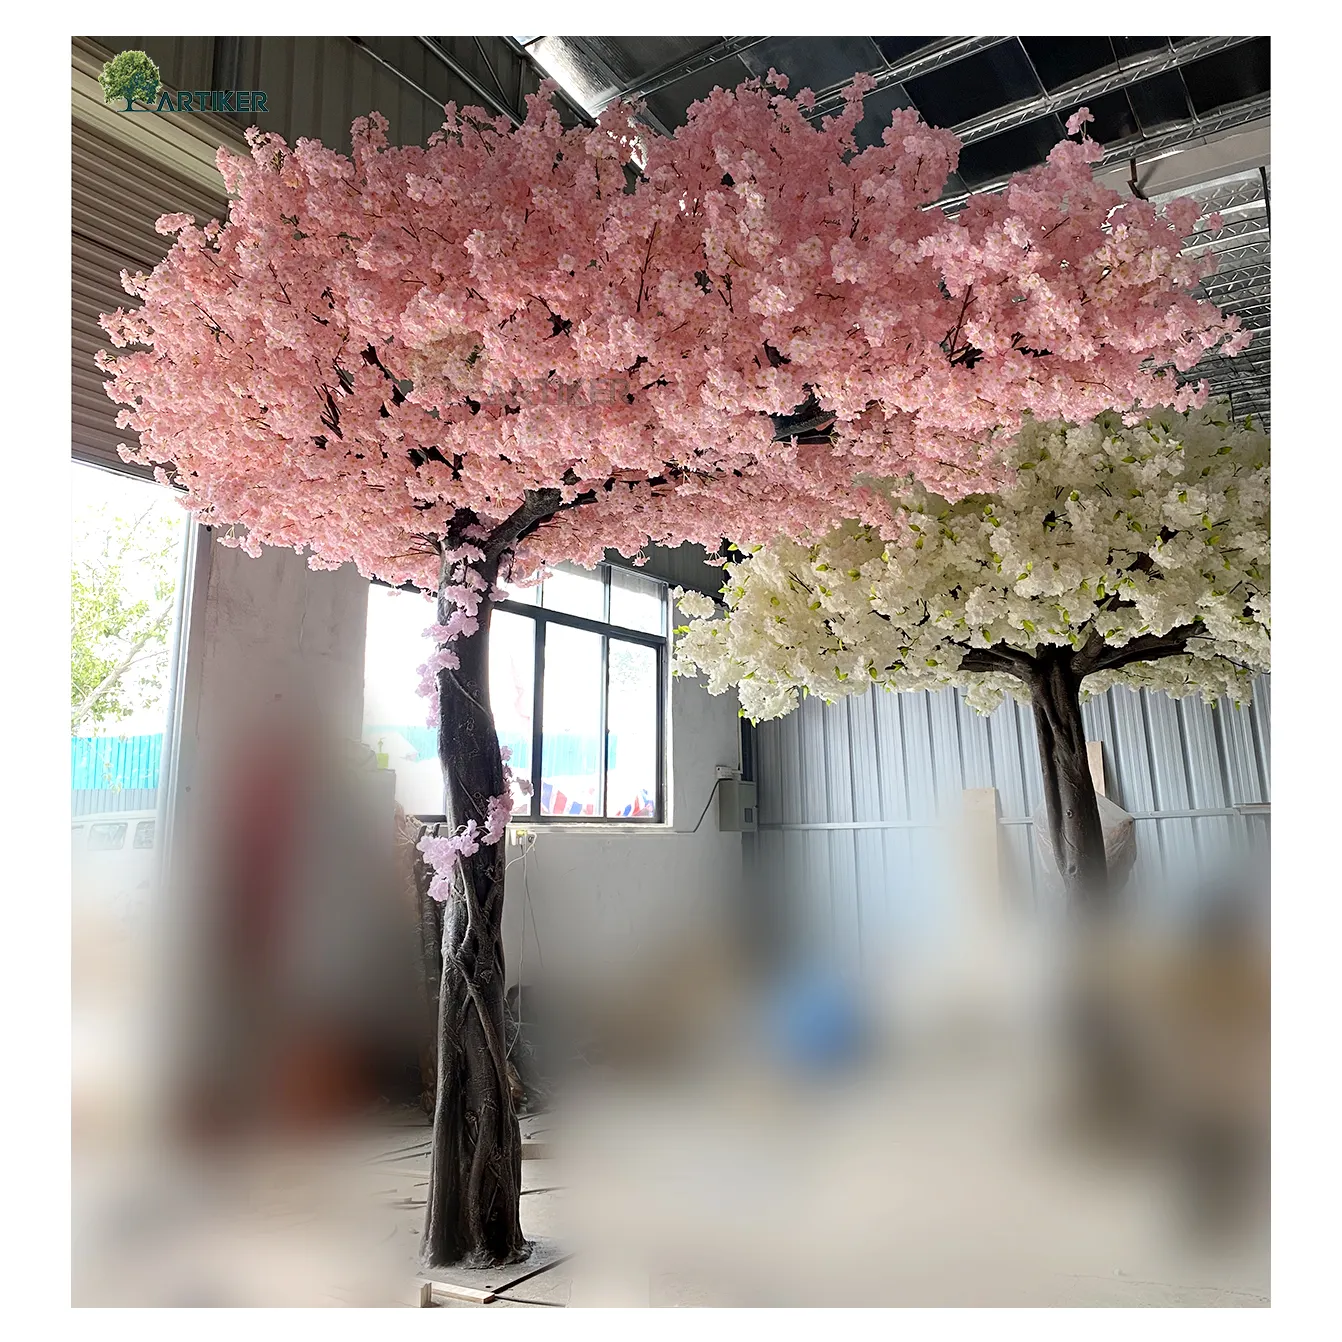 Centro de mesa artificial con arco de flores, vela de árbol arqueado, decoración de boda japonesa, árbol de flores de cerezo de 6 pies